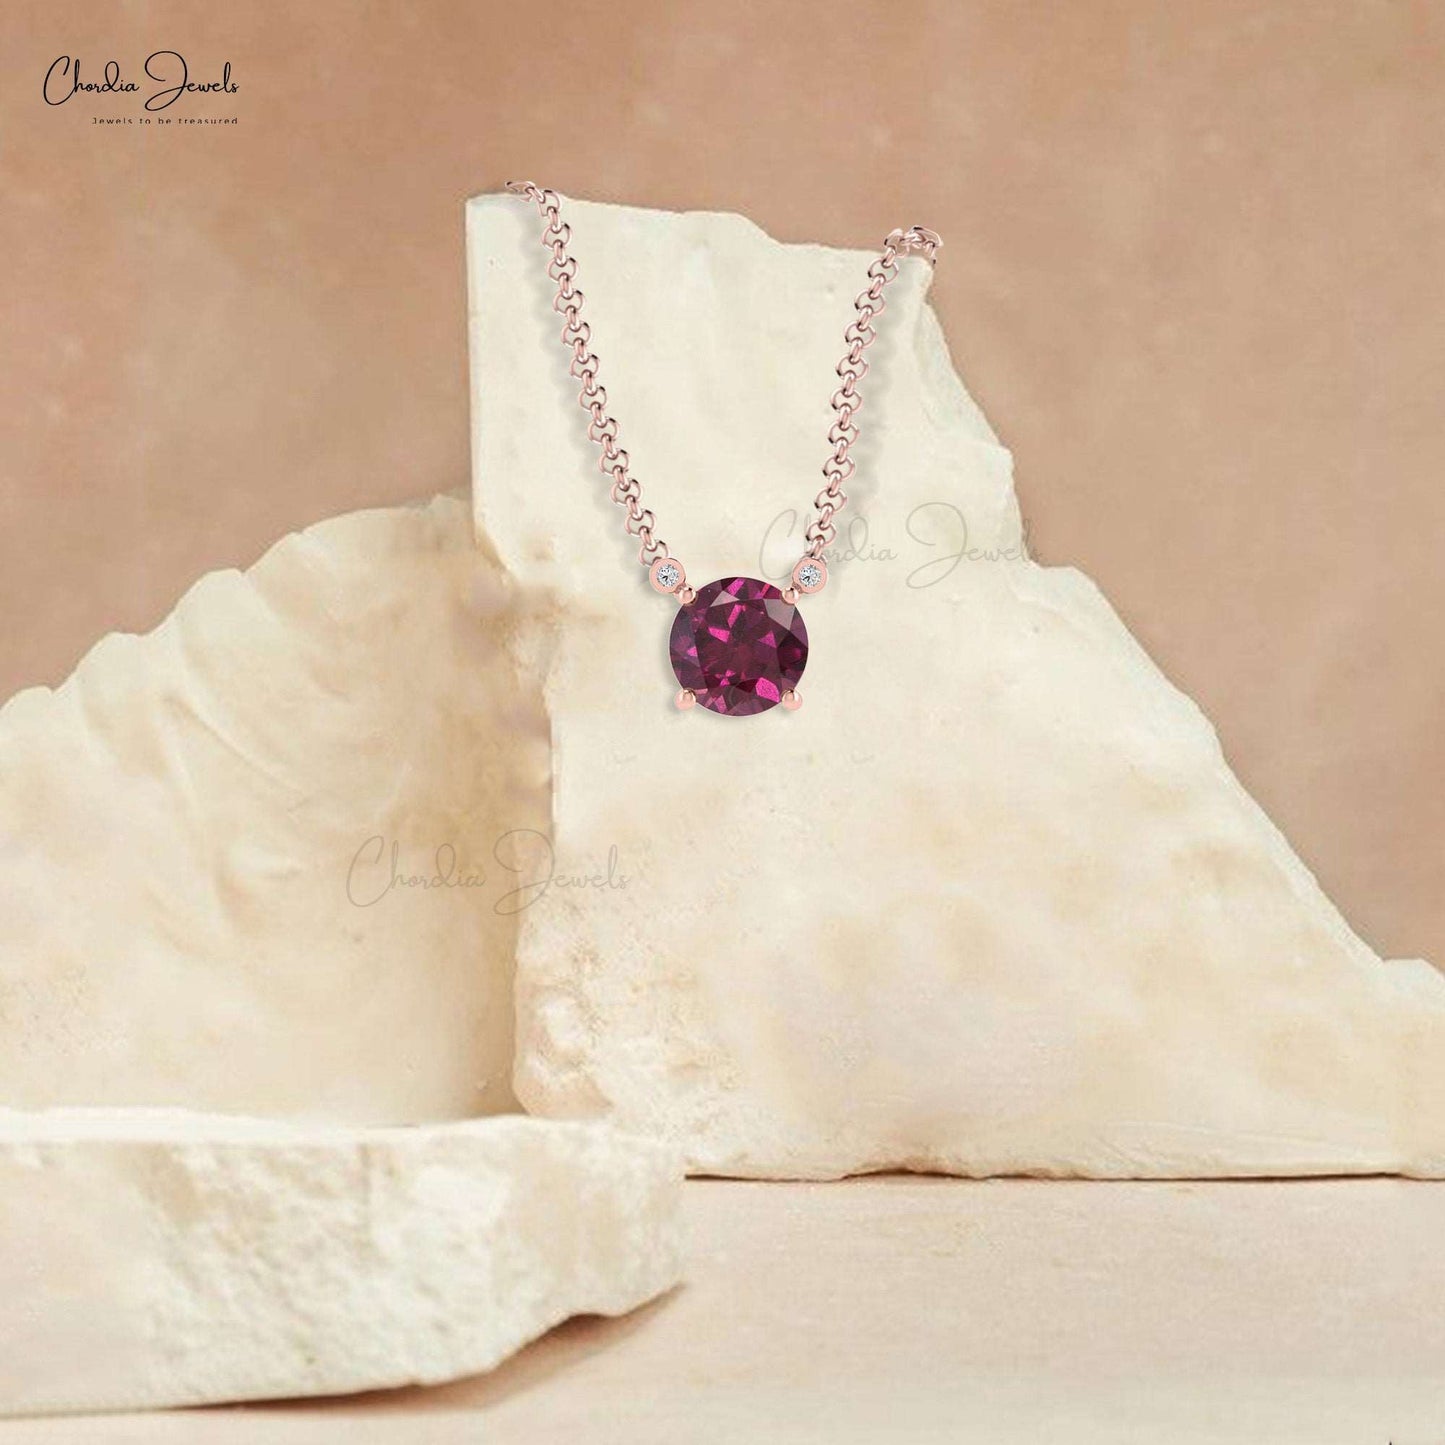 14k Solid Gold Diamond Necklace, Natural Rhodolite Garnet Necklace, 6mm Round Gemstone Necklace Gift for Wife, Handmade Necklace